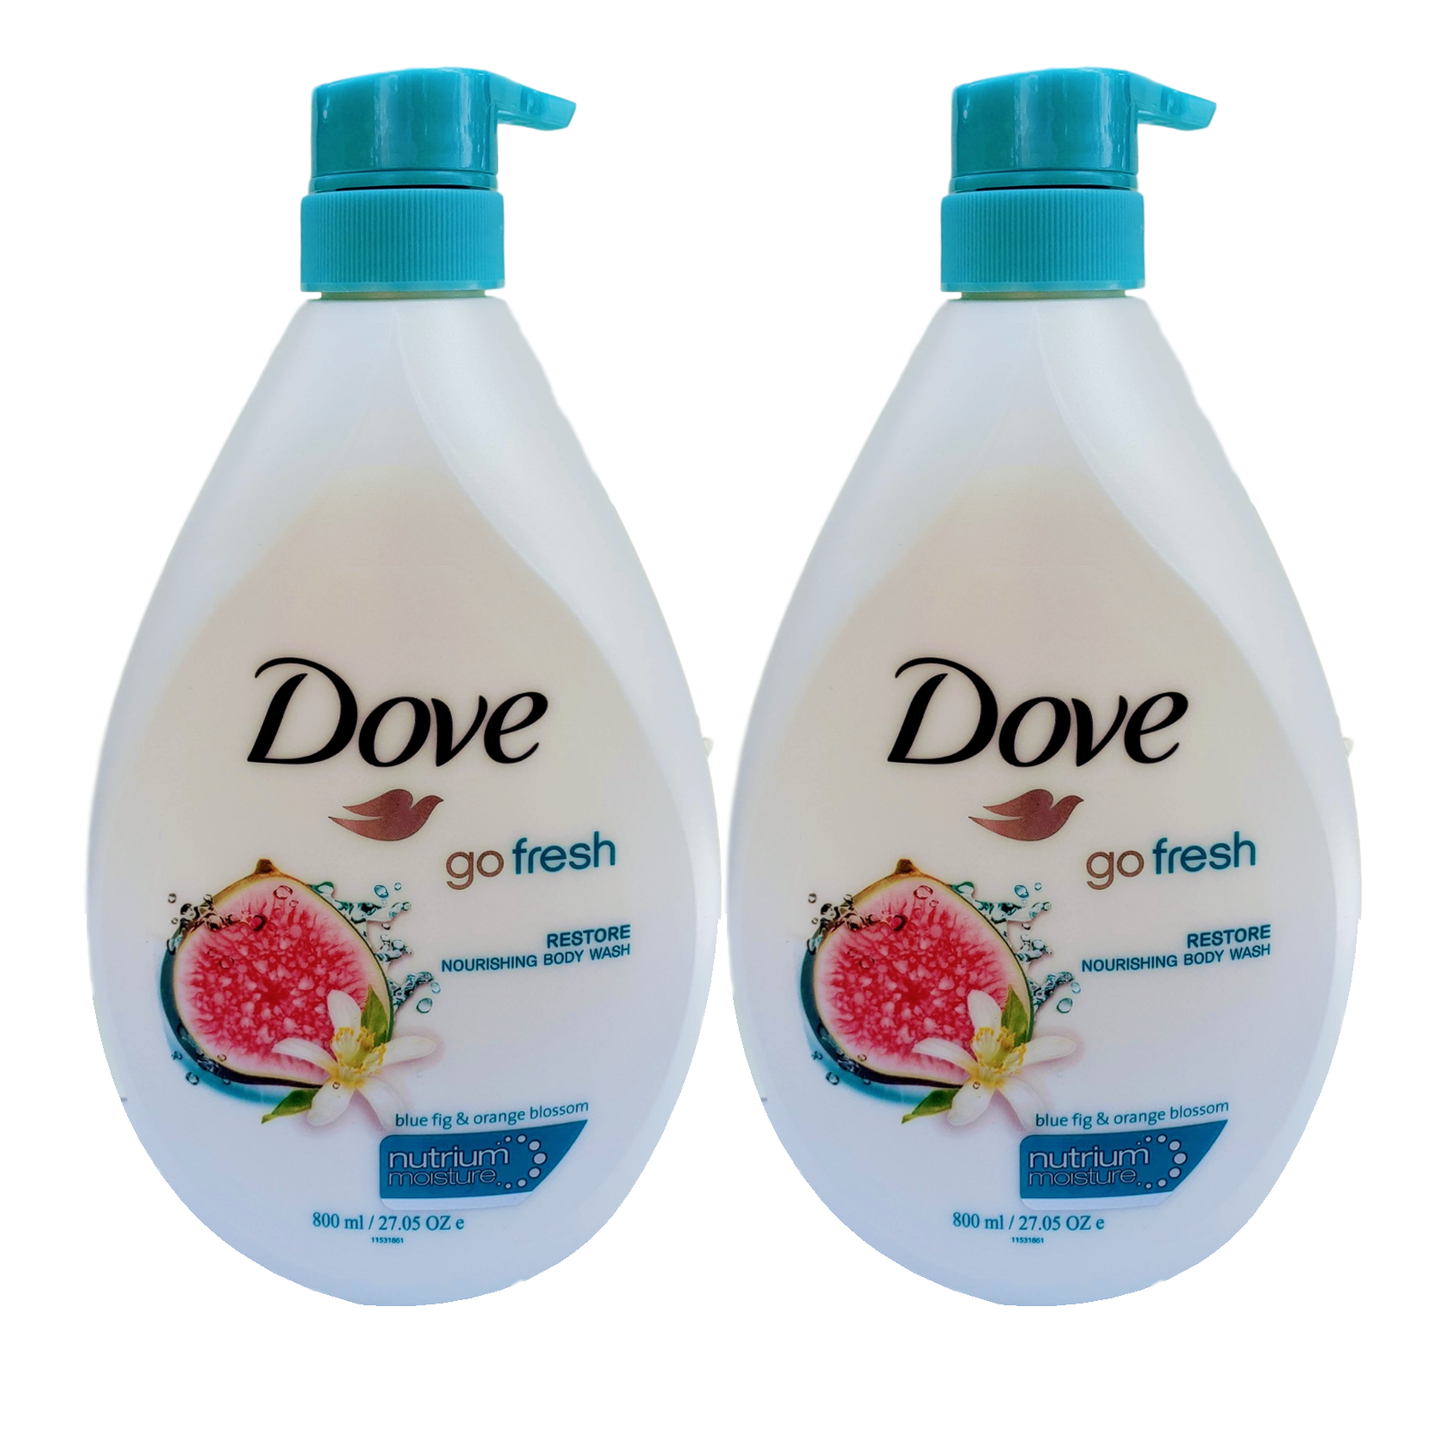 Dove Go Fresh Nourishing Body Wash 800 ml 27.05 oz "2-PACK"